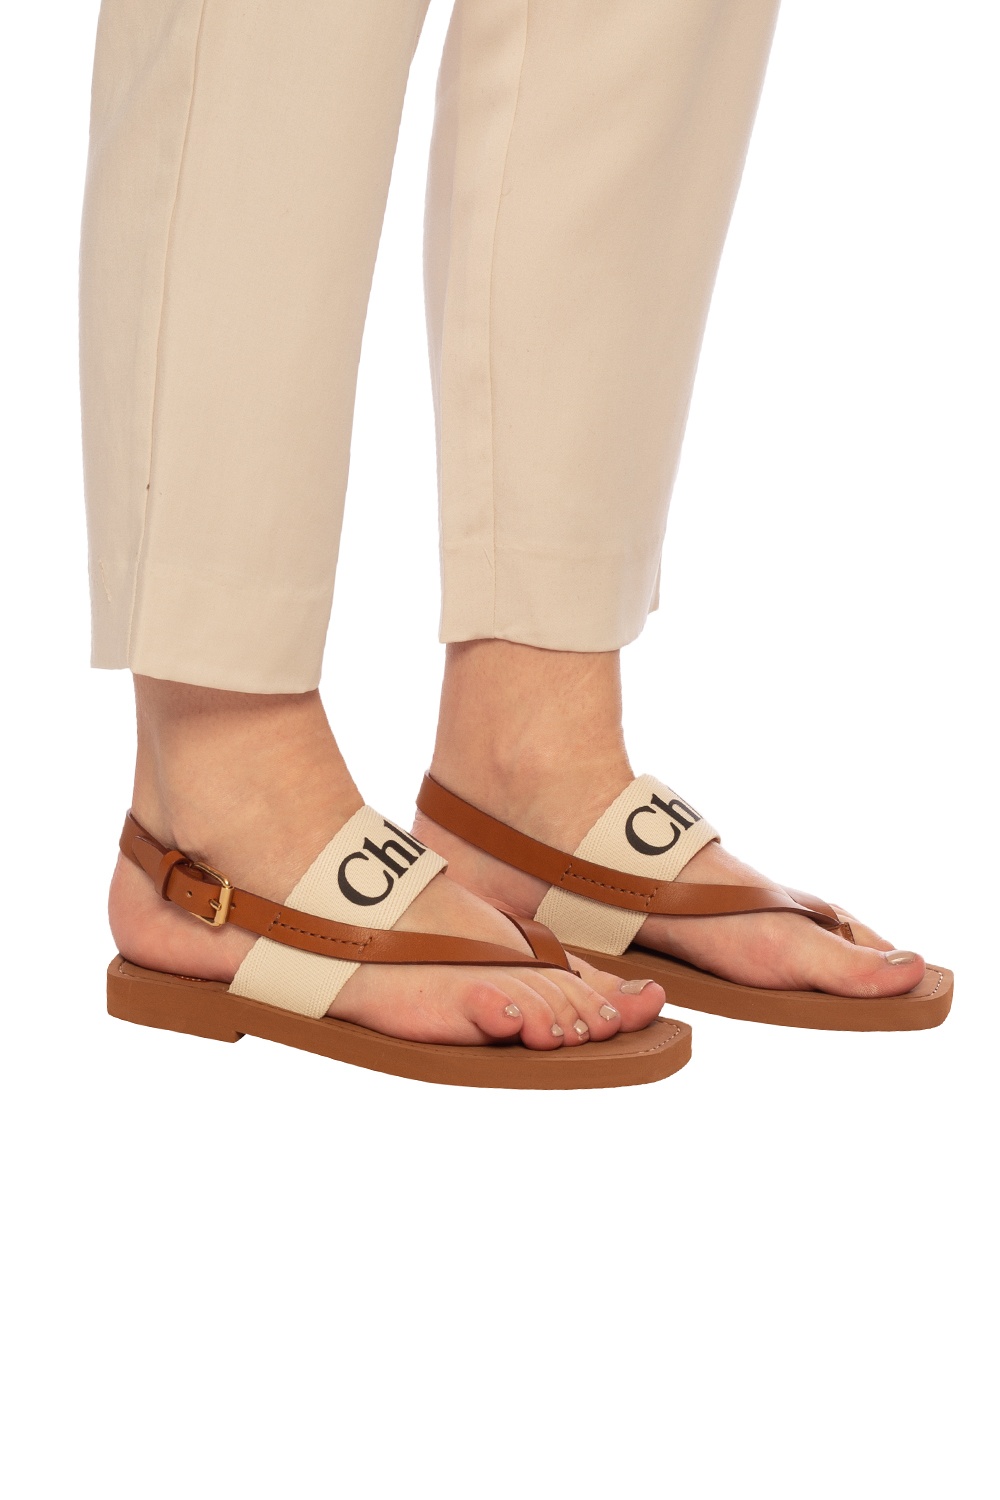 Fisker kul tredobbelt Chloé 'Woody' sandals | Women's Shoes | Vitkac